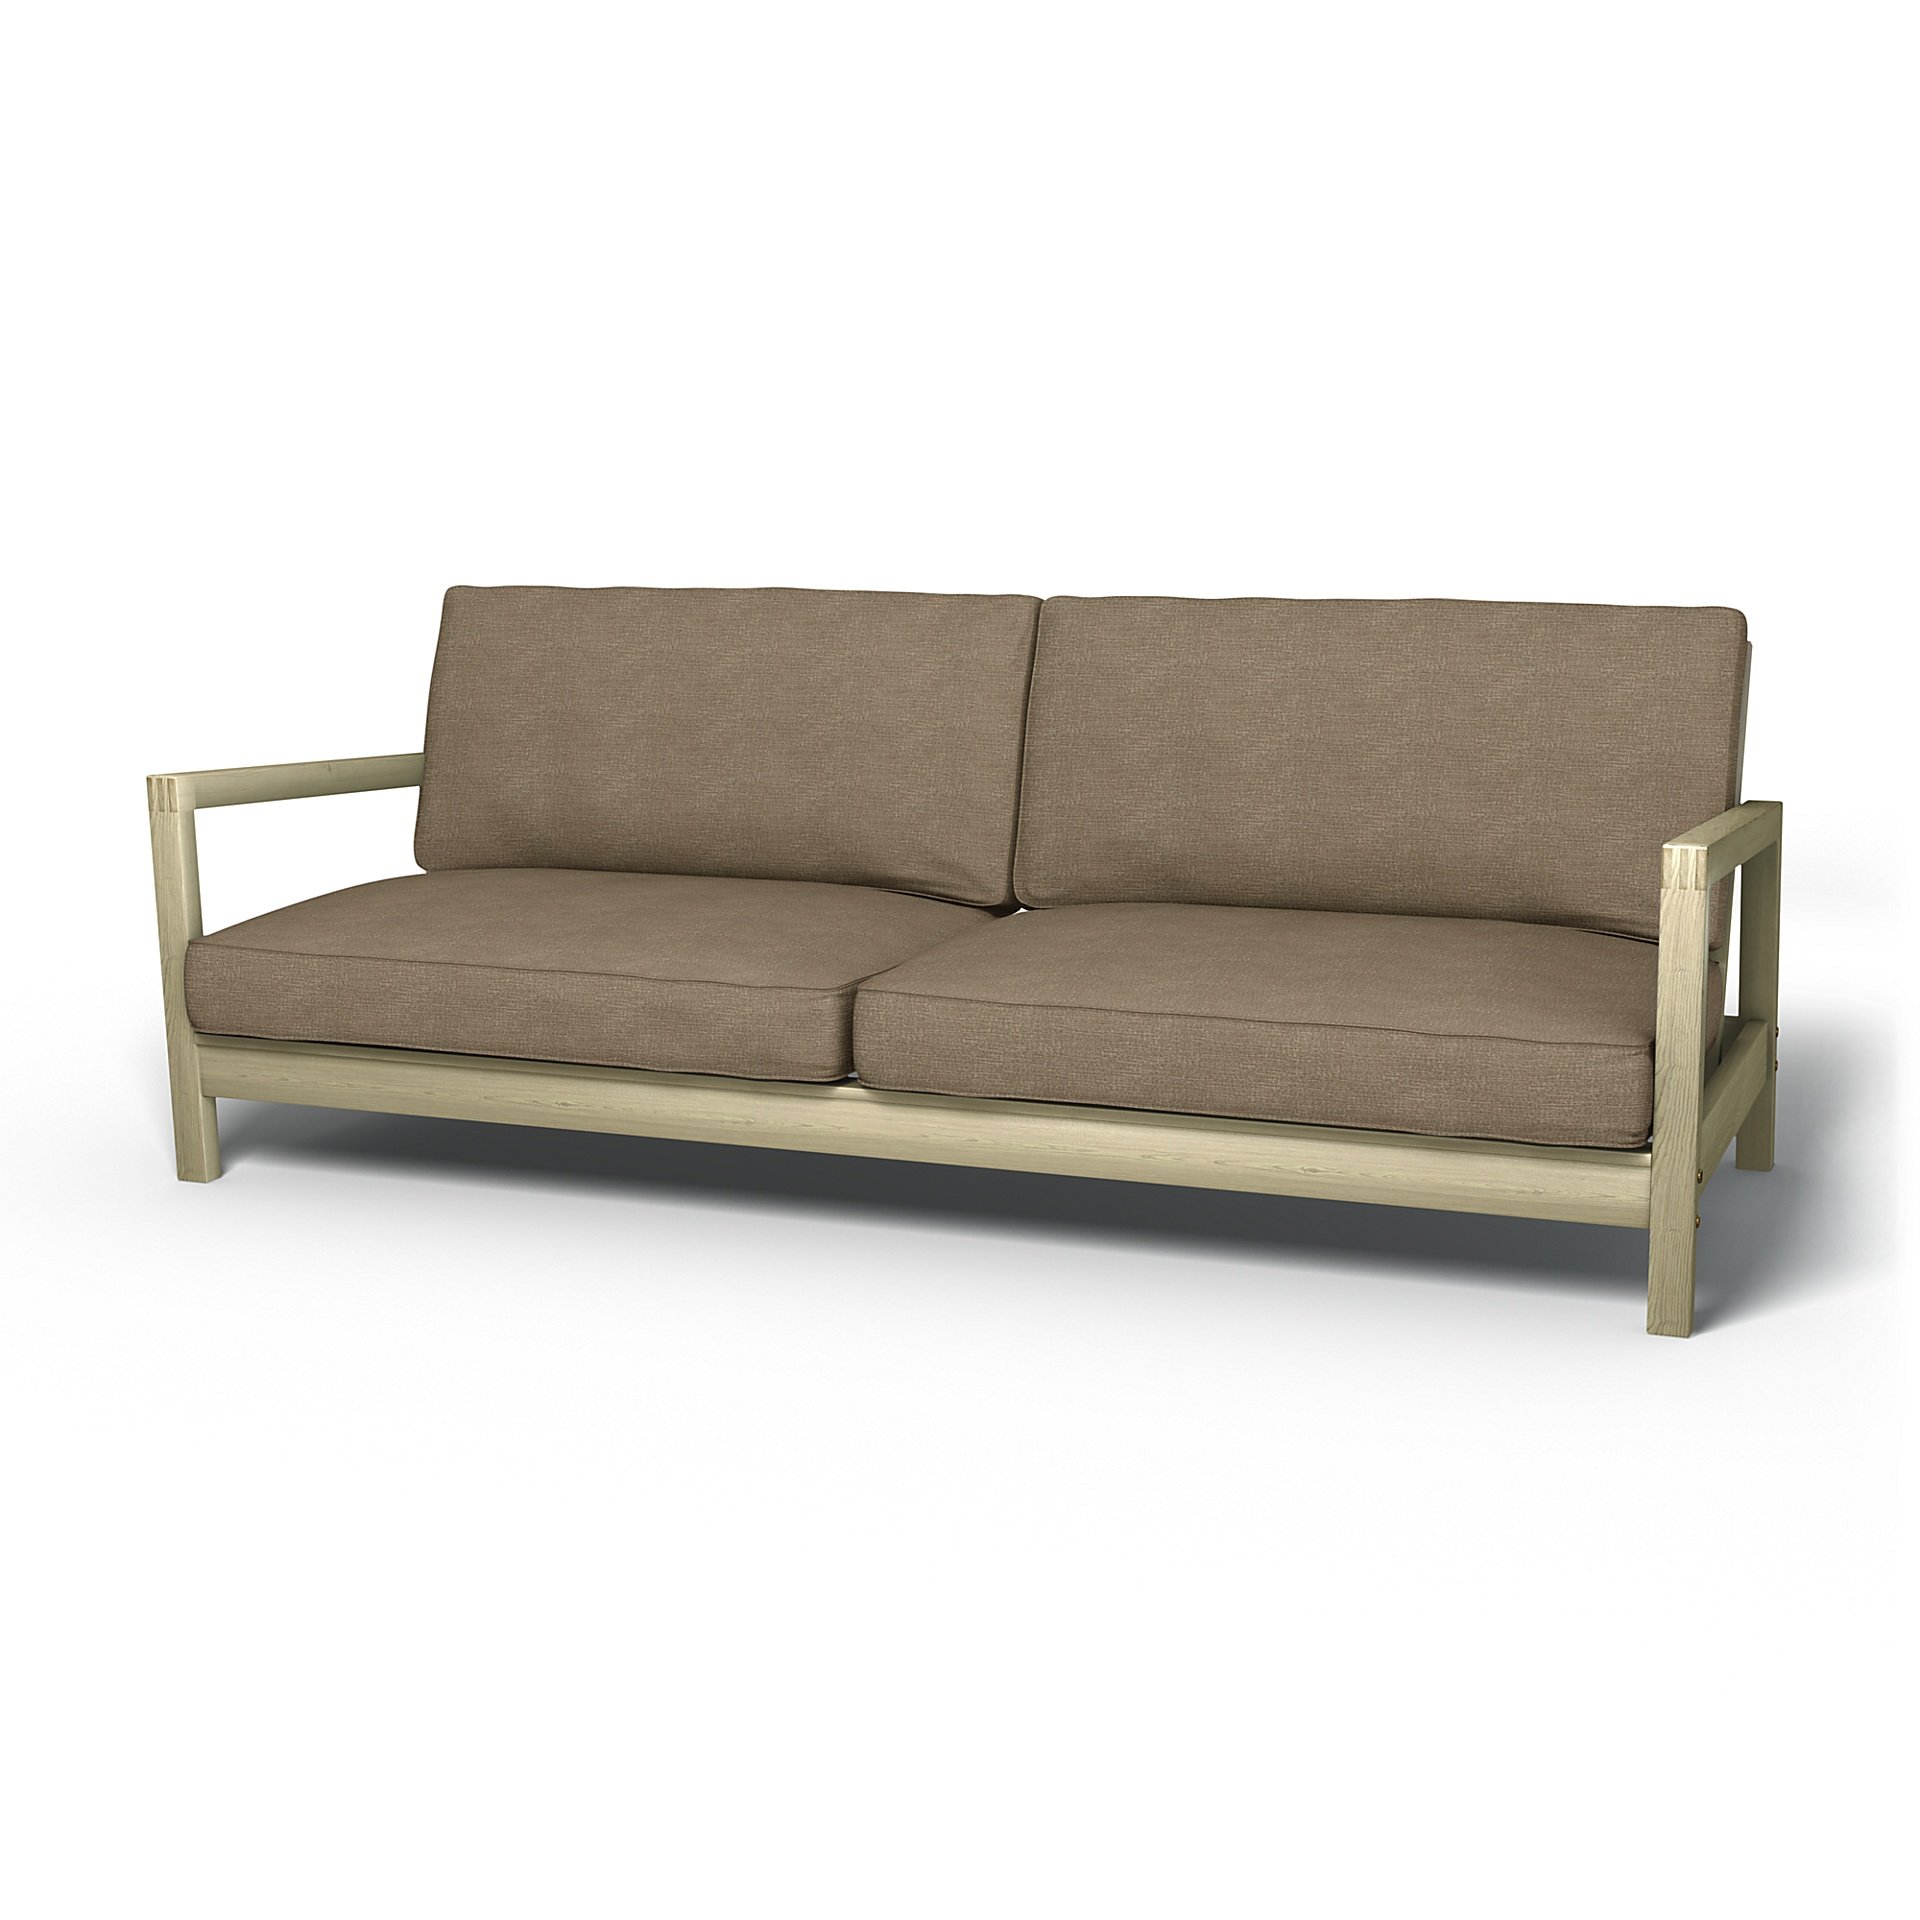 IKEA - Lillberg Sofa Bed Cover, Camel, Boucle & Texture - Bemz